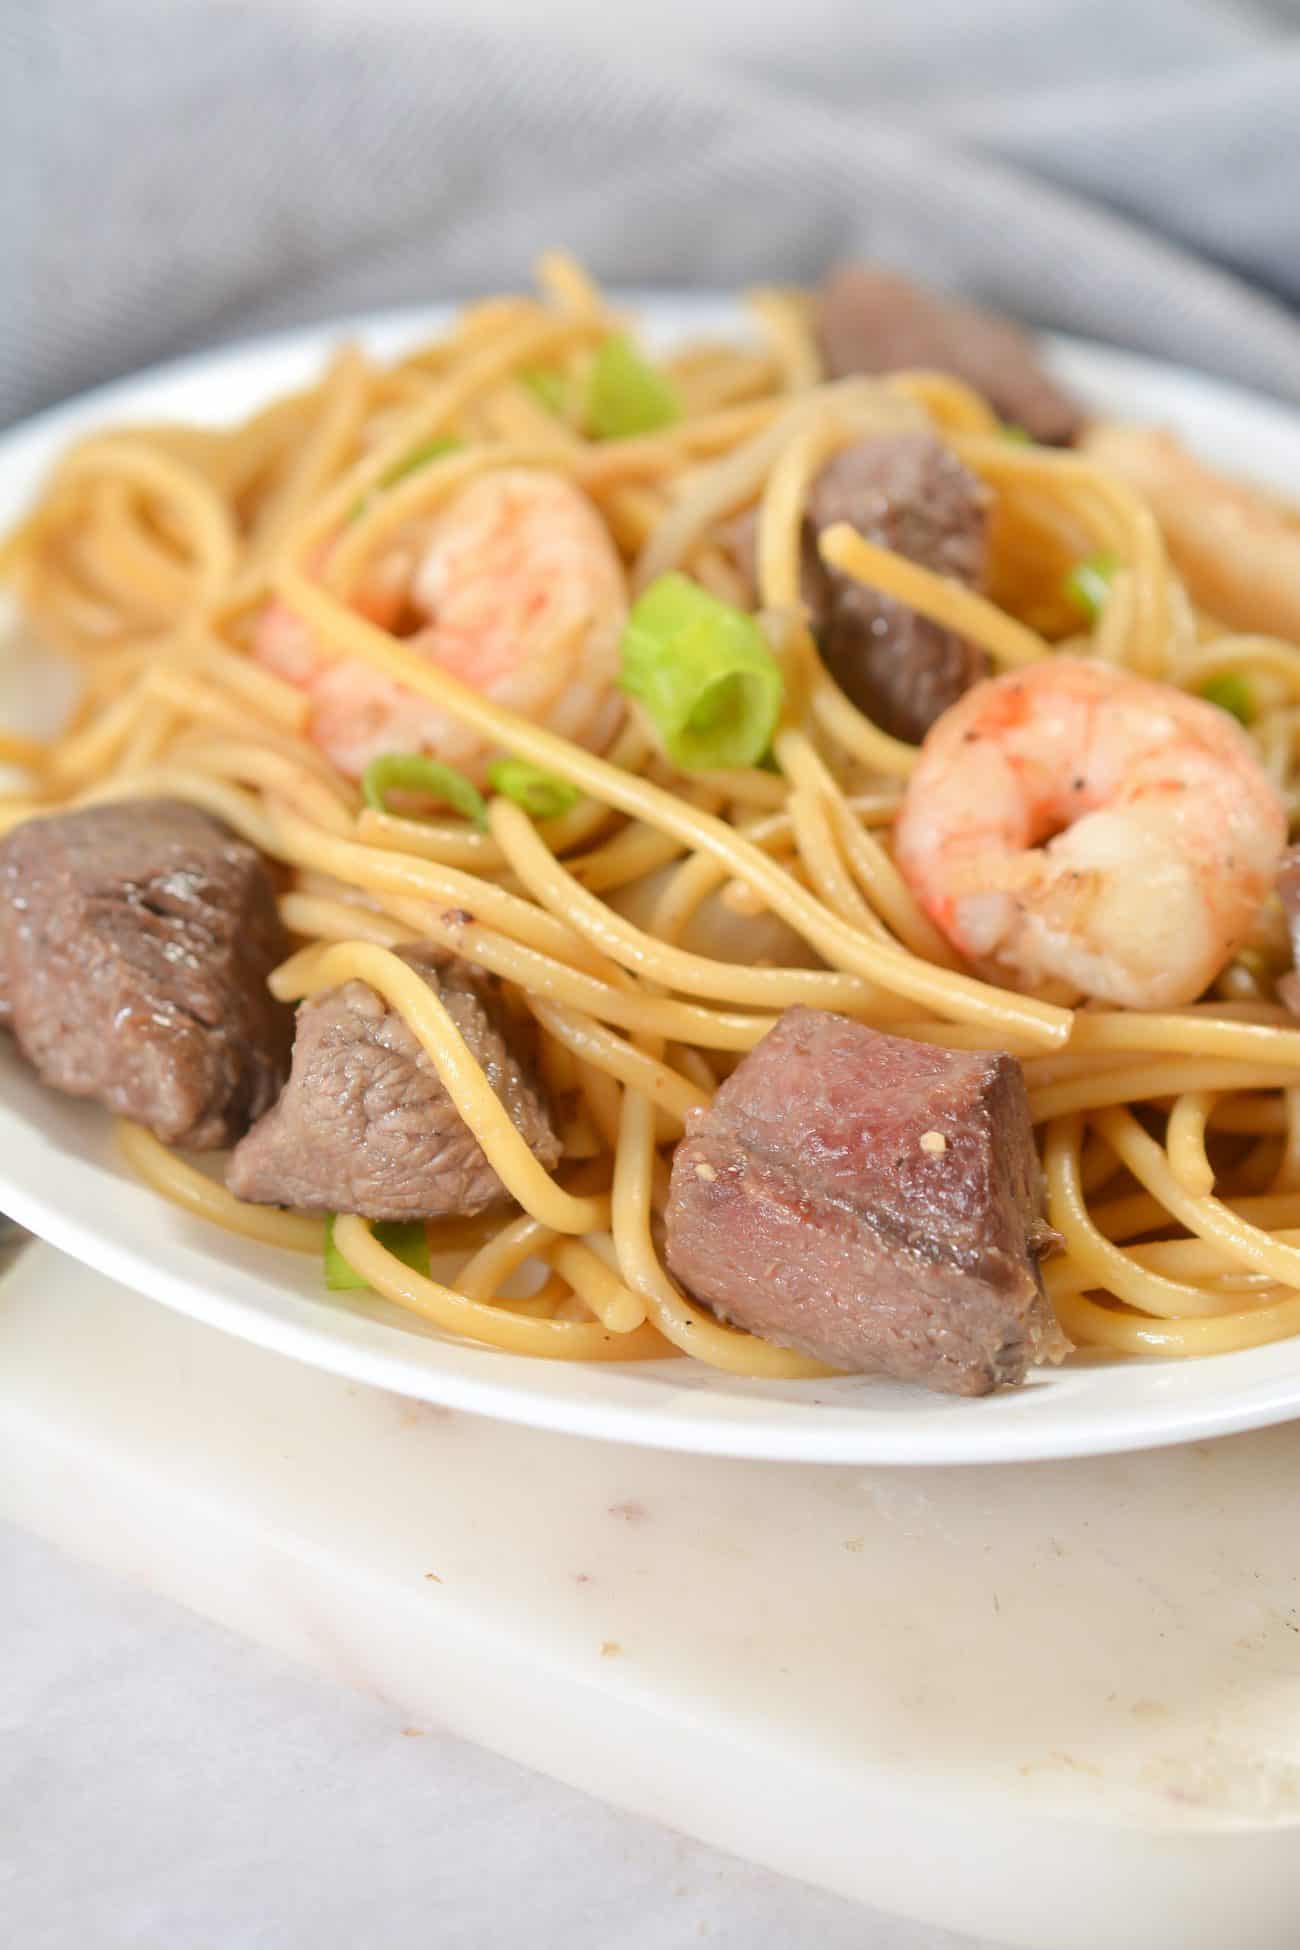 Steak and Shrimp Teriyaki Noodles